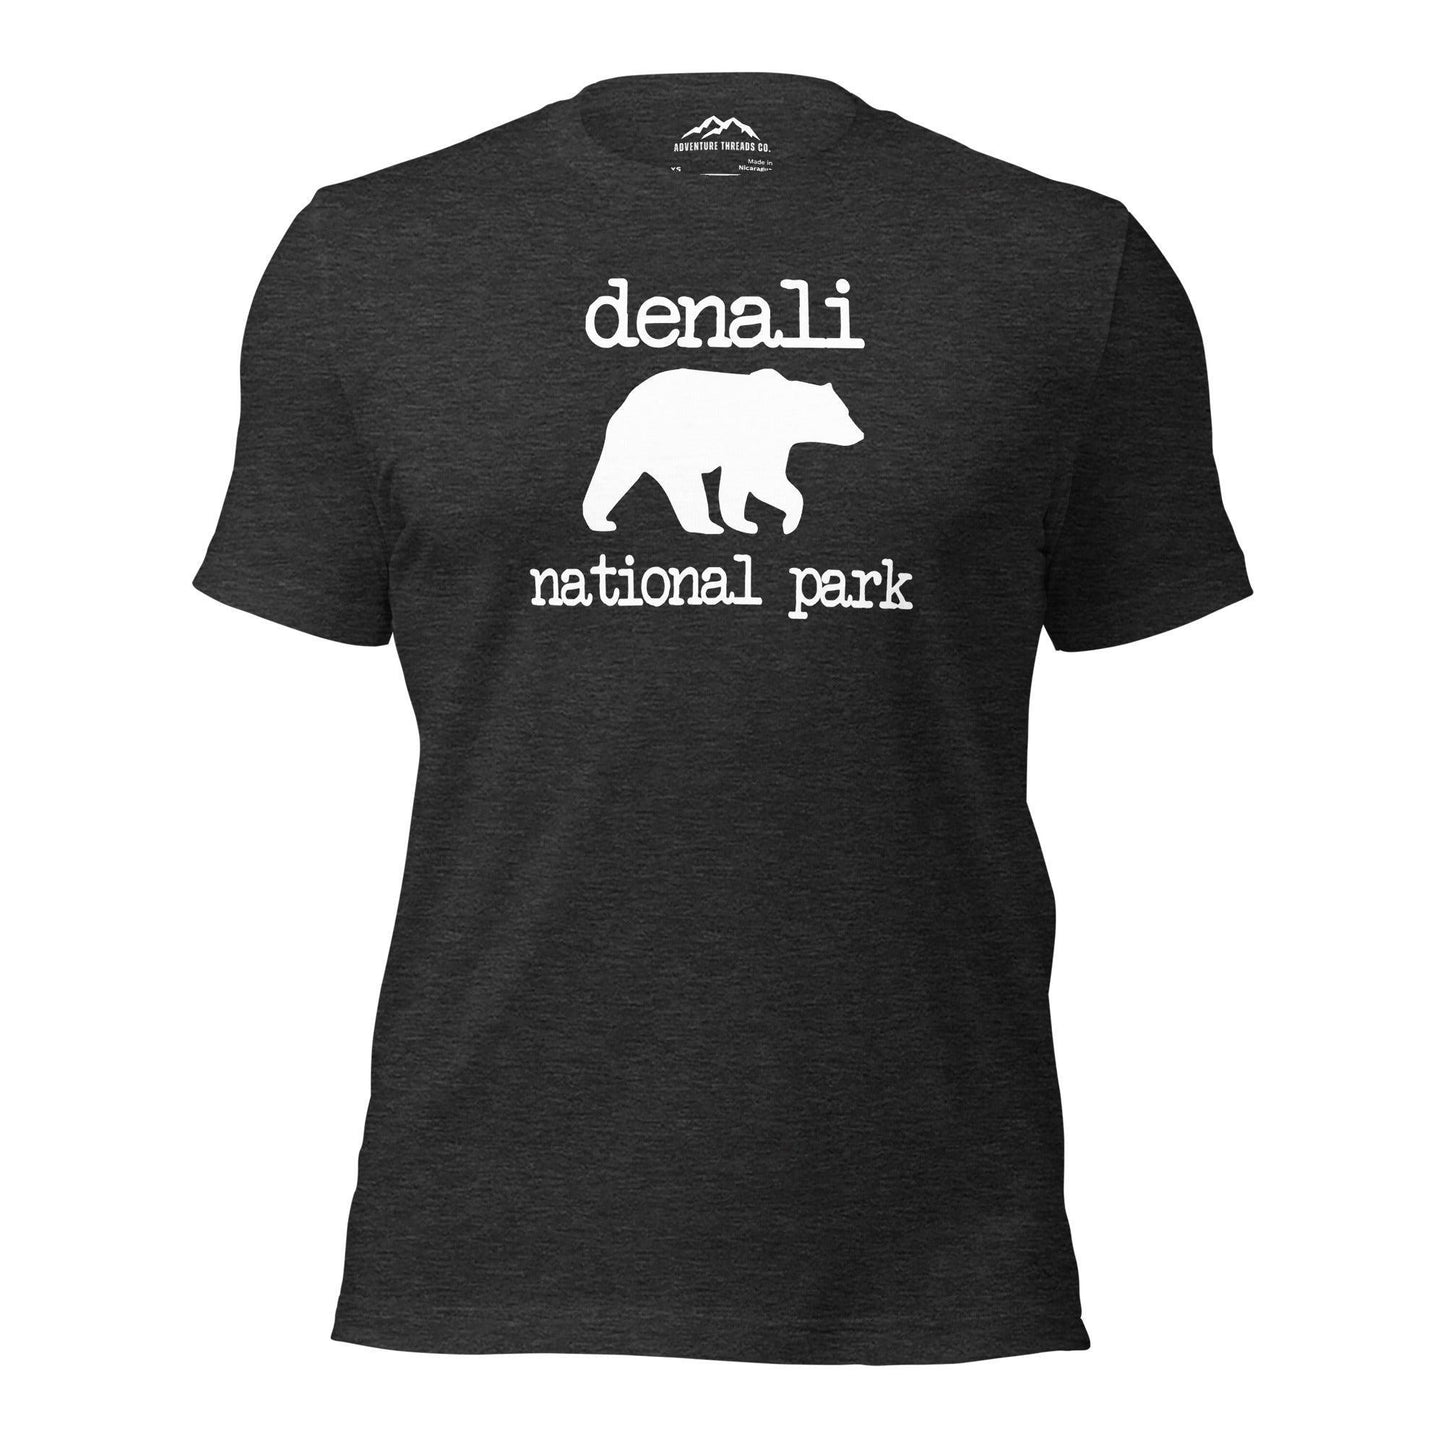 Denali National Park T-Shirt - Adventure Threads Company